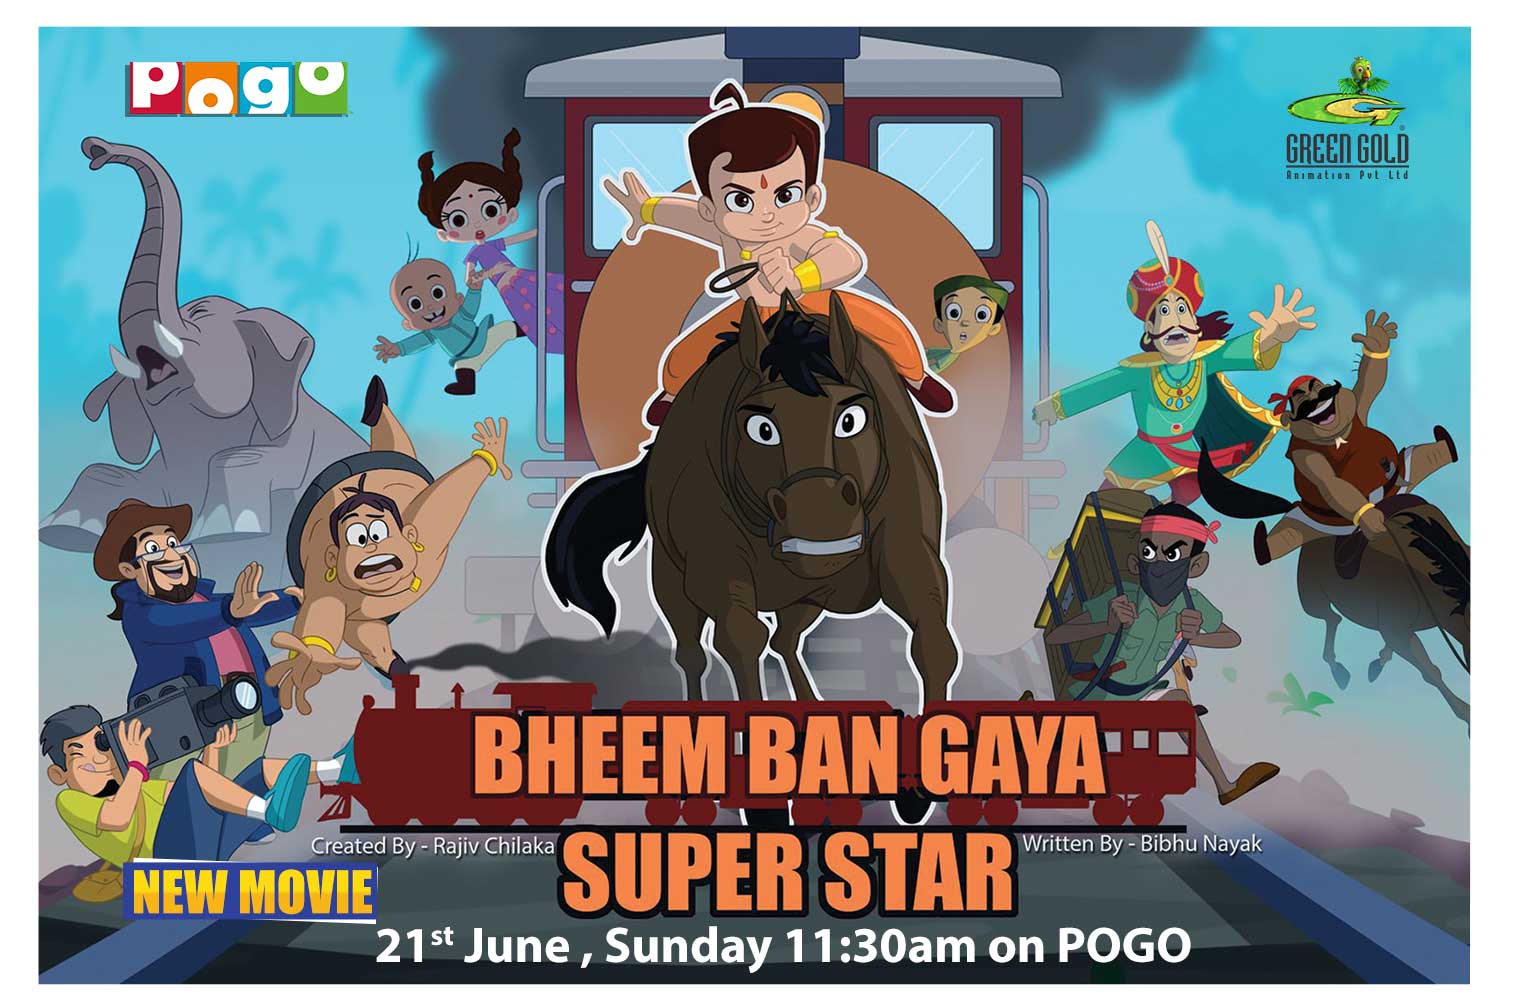 BHEEM BAN GAYA SUPER STAR NEW TELEMOVIE ON POGO